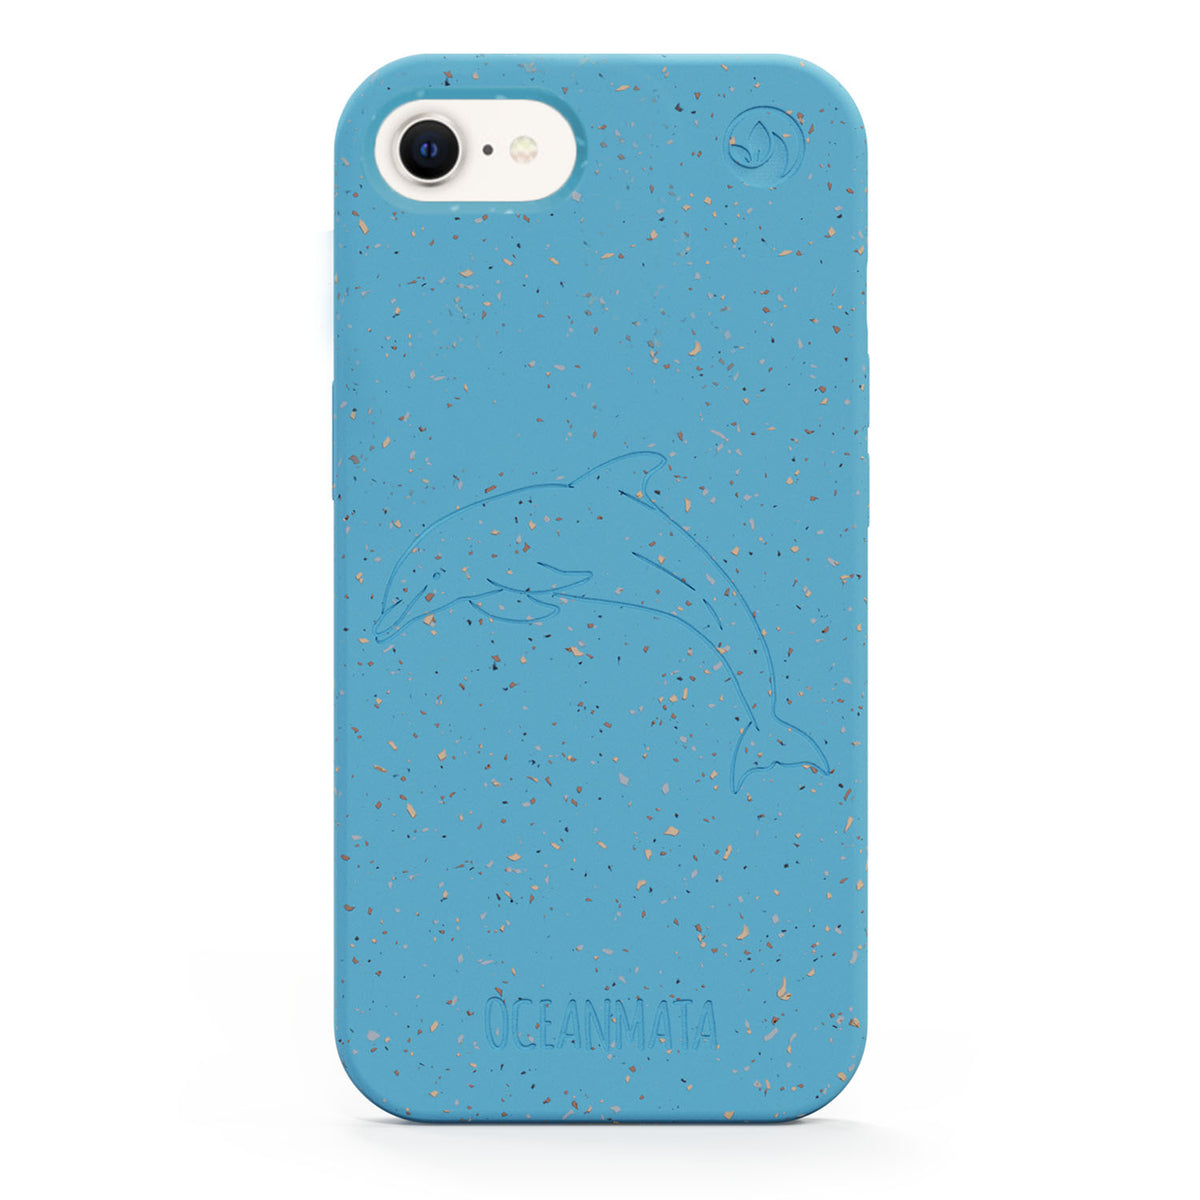 nachhaltige Apple iPhone Hülle "Dolphin Edition"